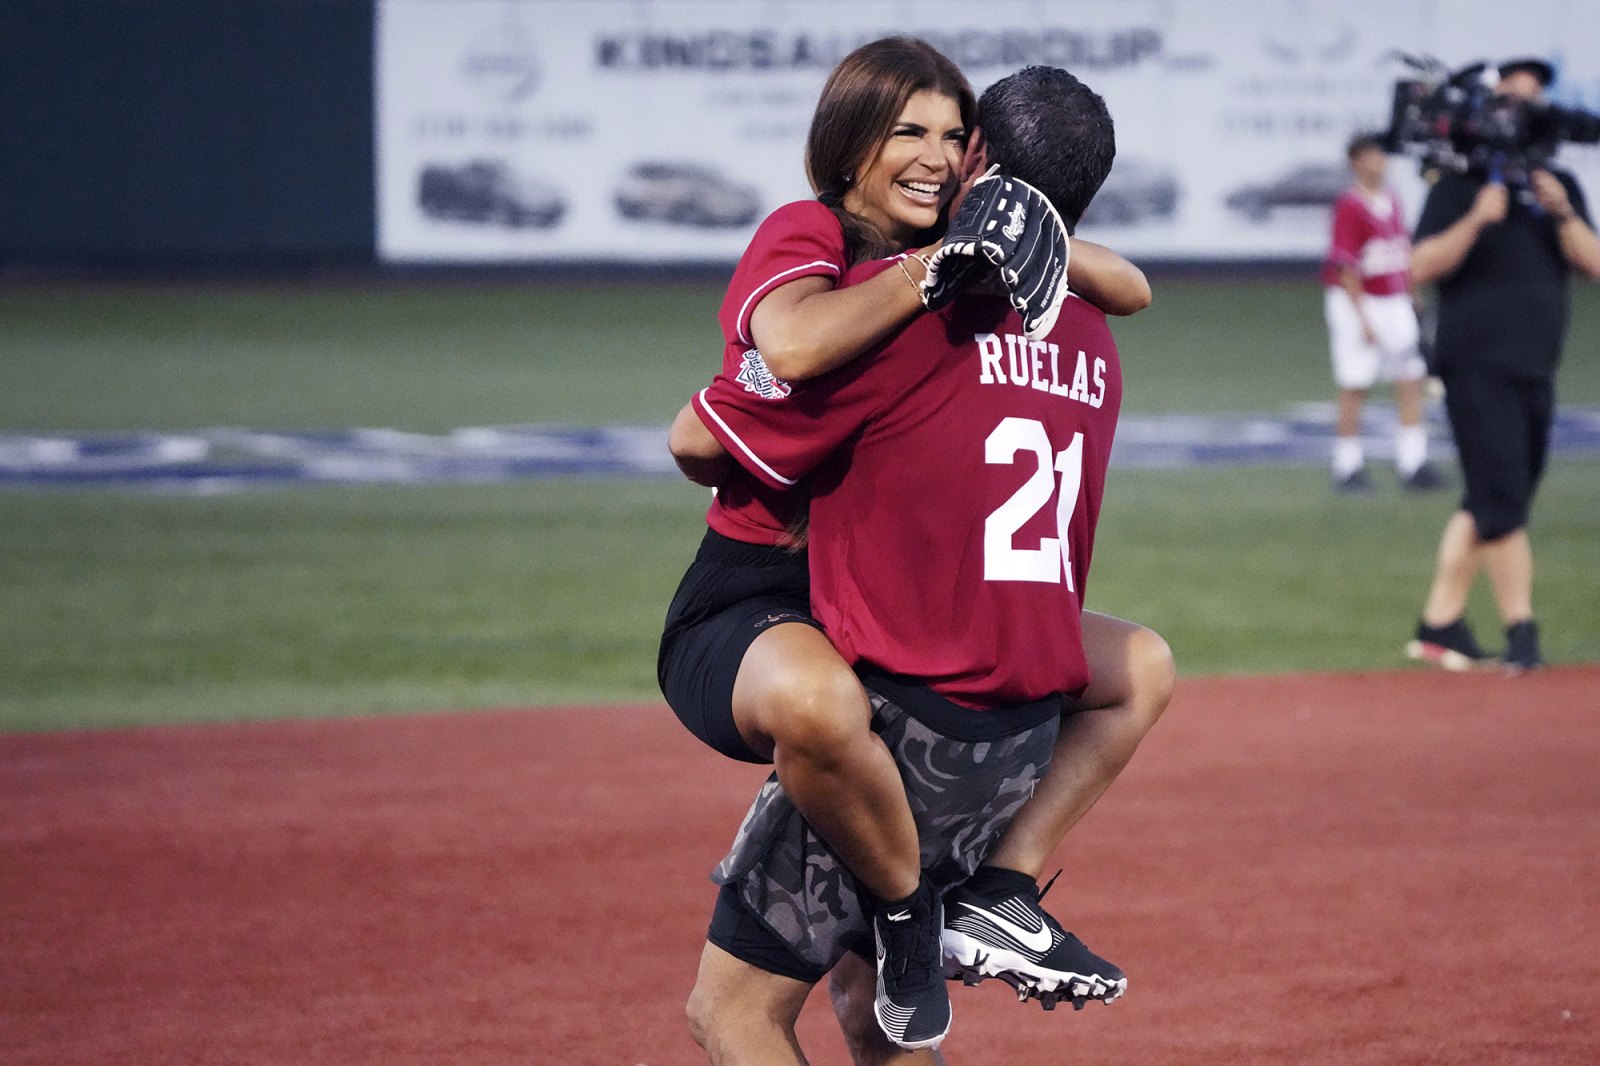 Teresa Giudice and Boyfriend Luis 'Louie' Ruelas Were 'Inseparable' at 'RHONJ' Charity Softball Game